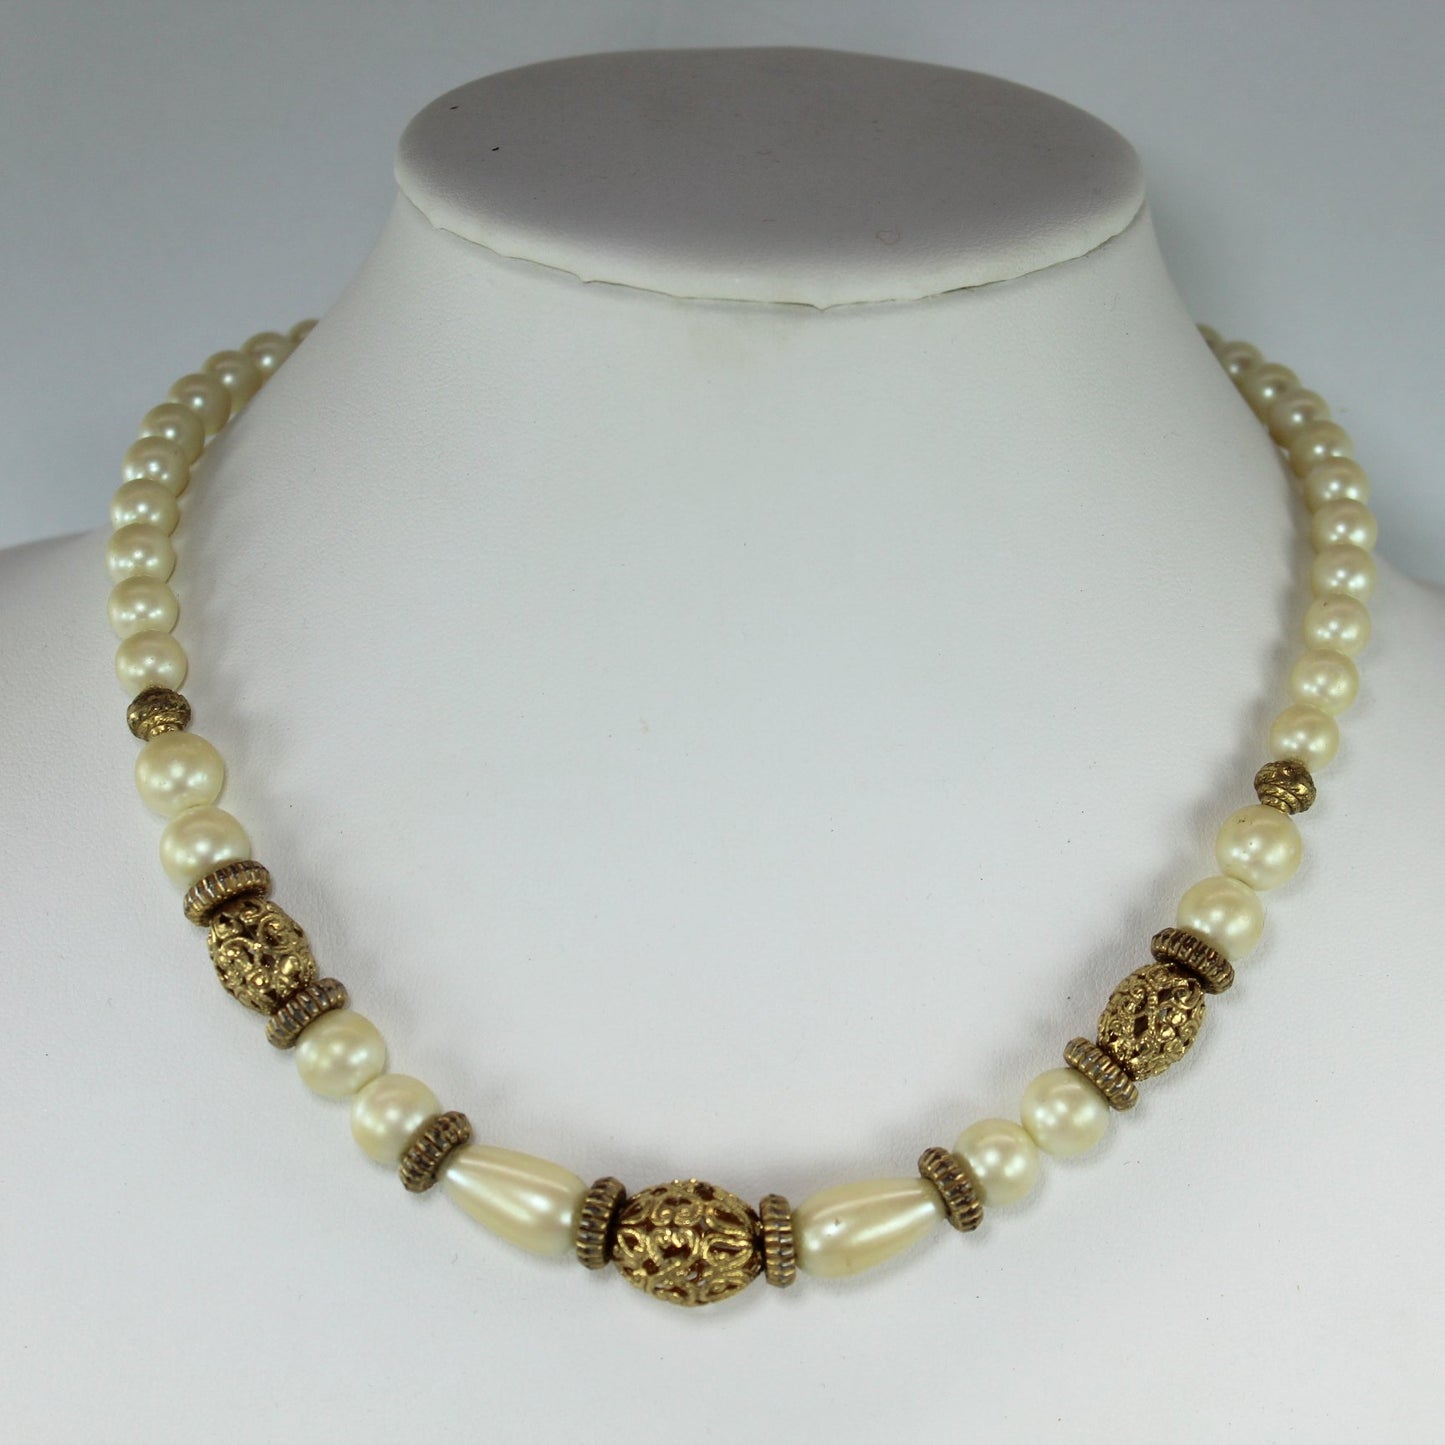 Maker 1928 Necklace Goldtone Filigree Pearls 18" Great Look